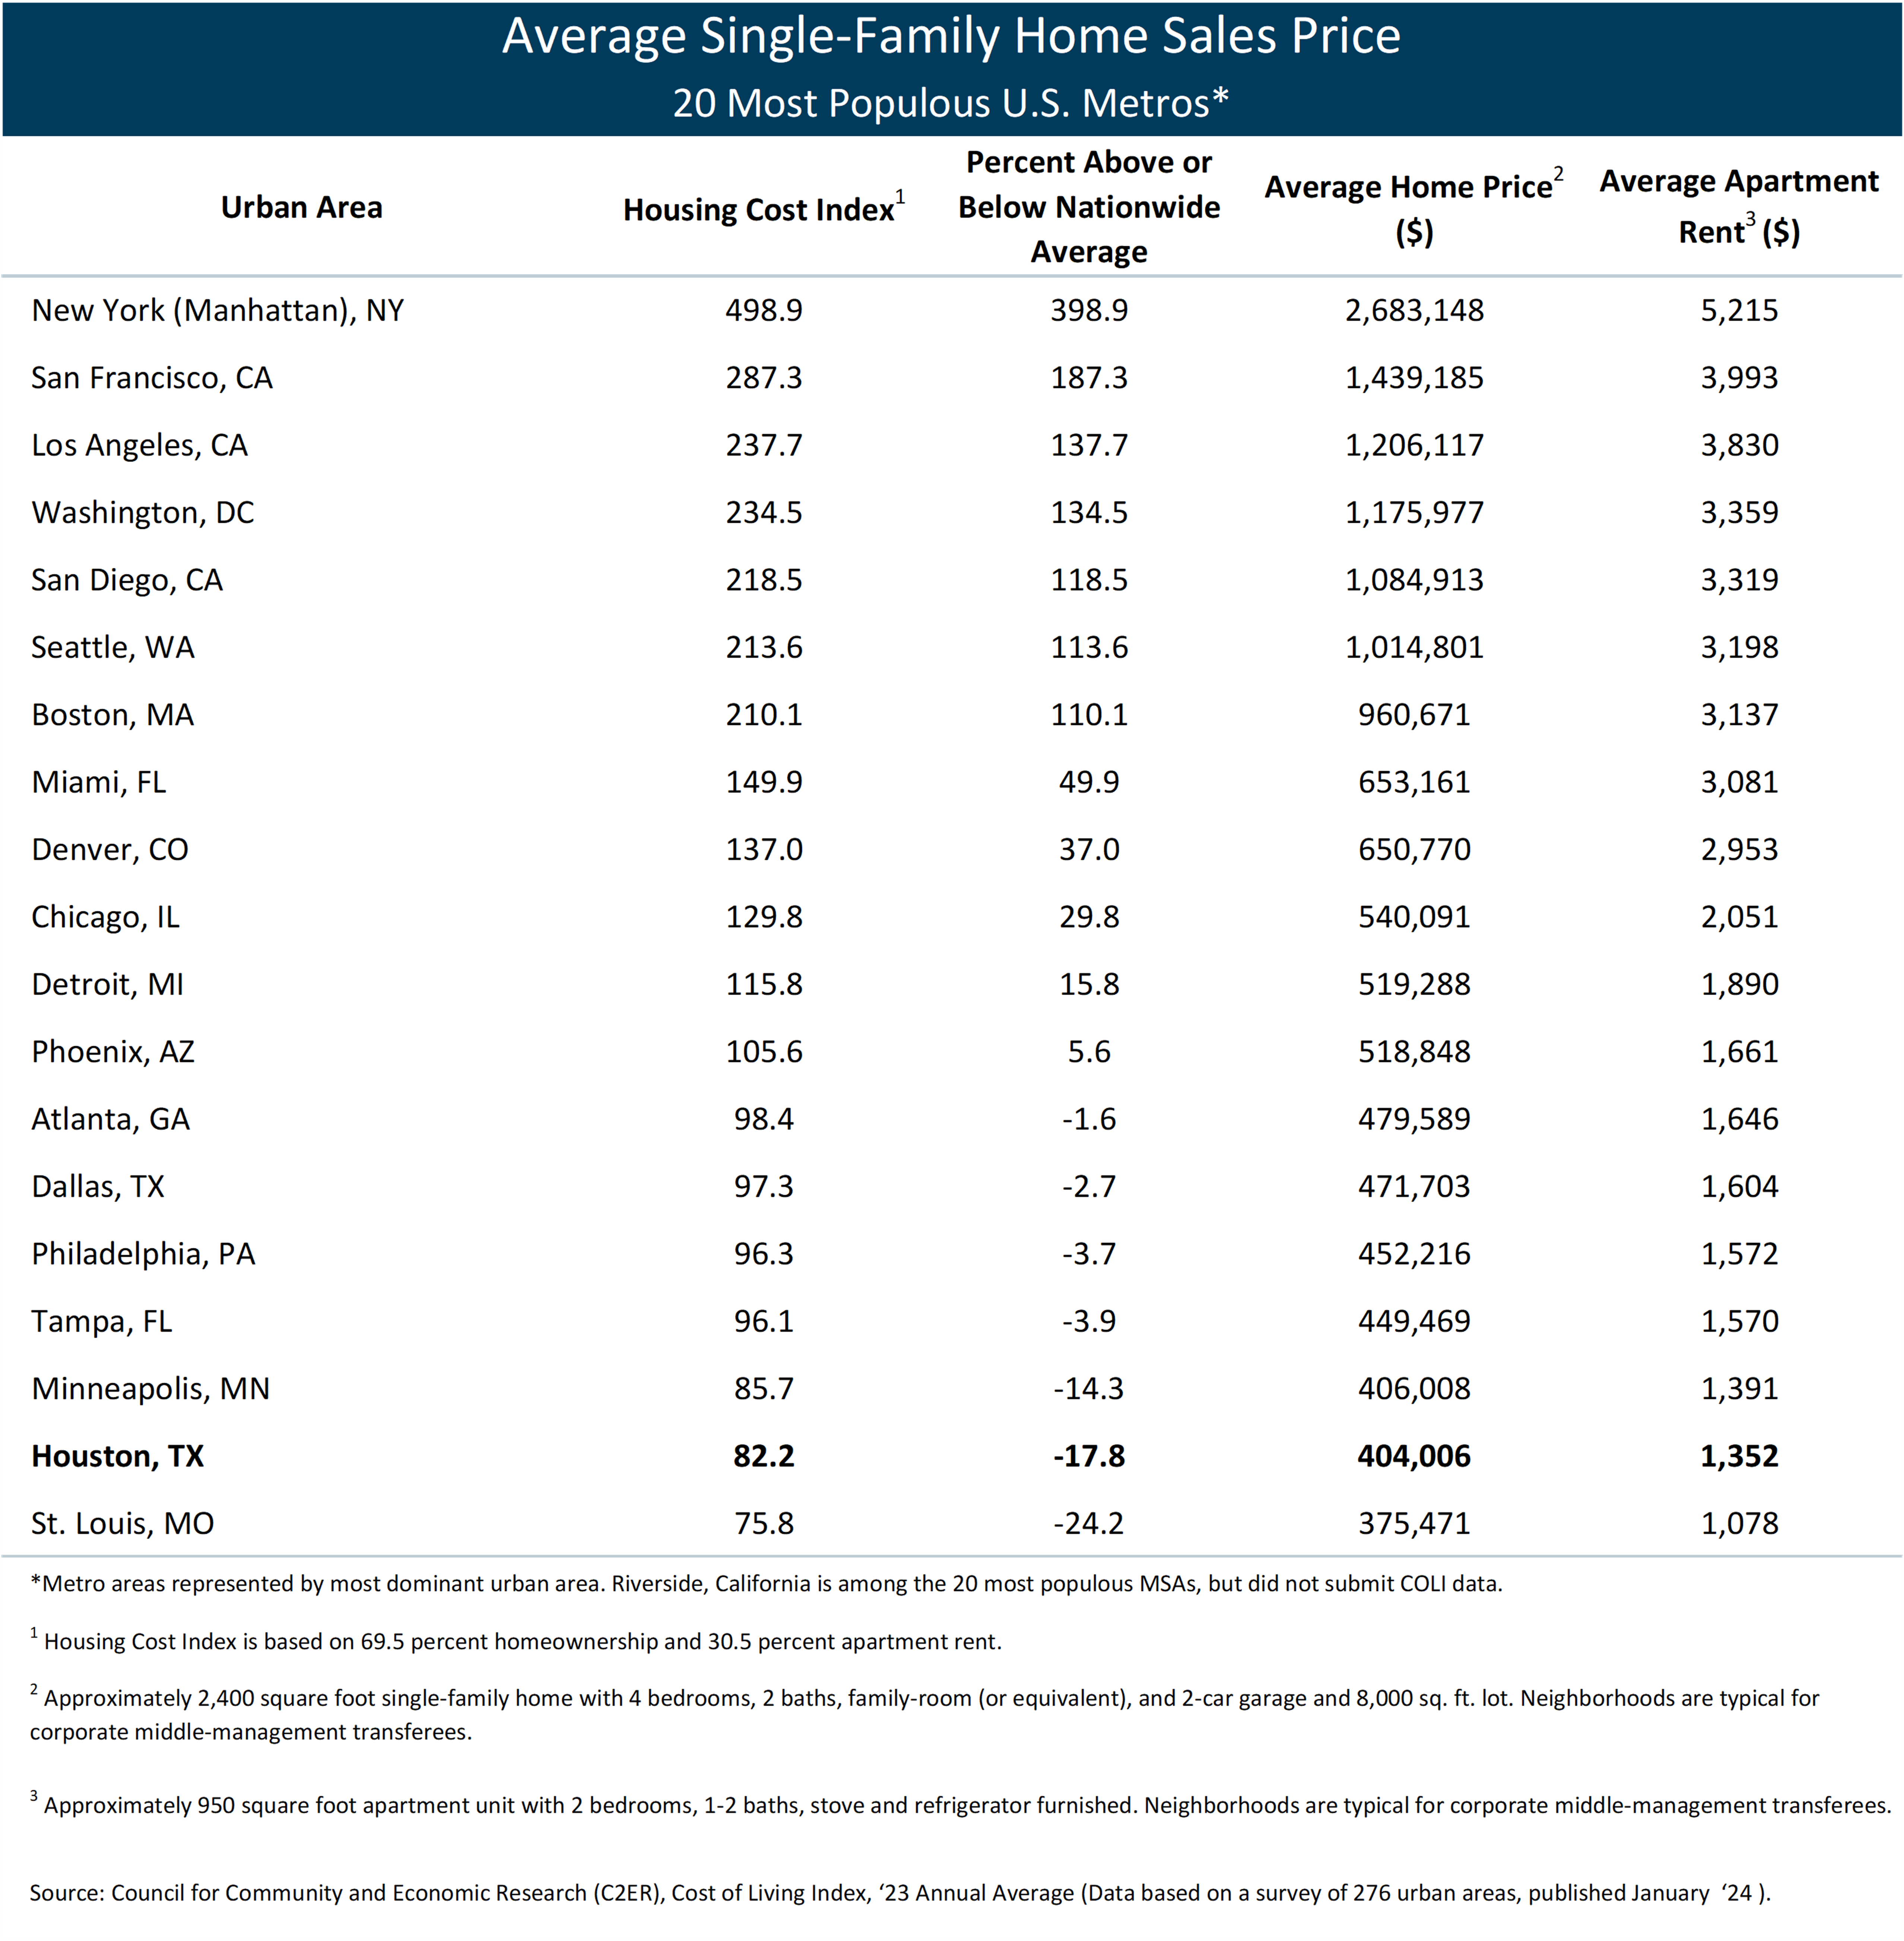 Housing cost comparison chart